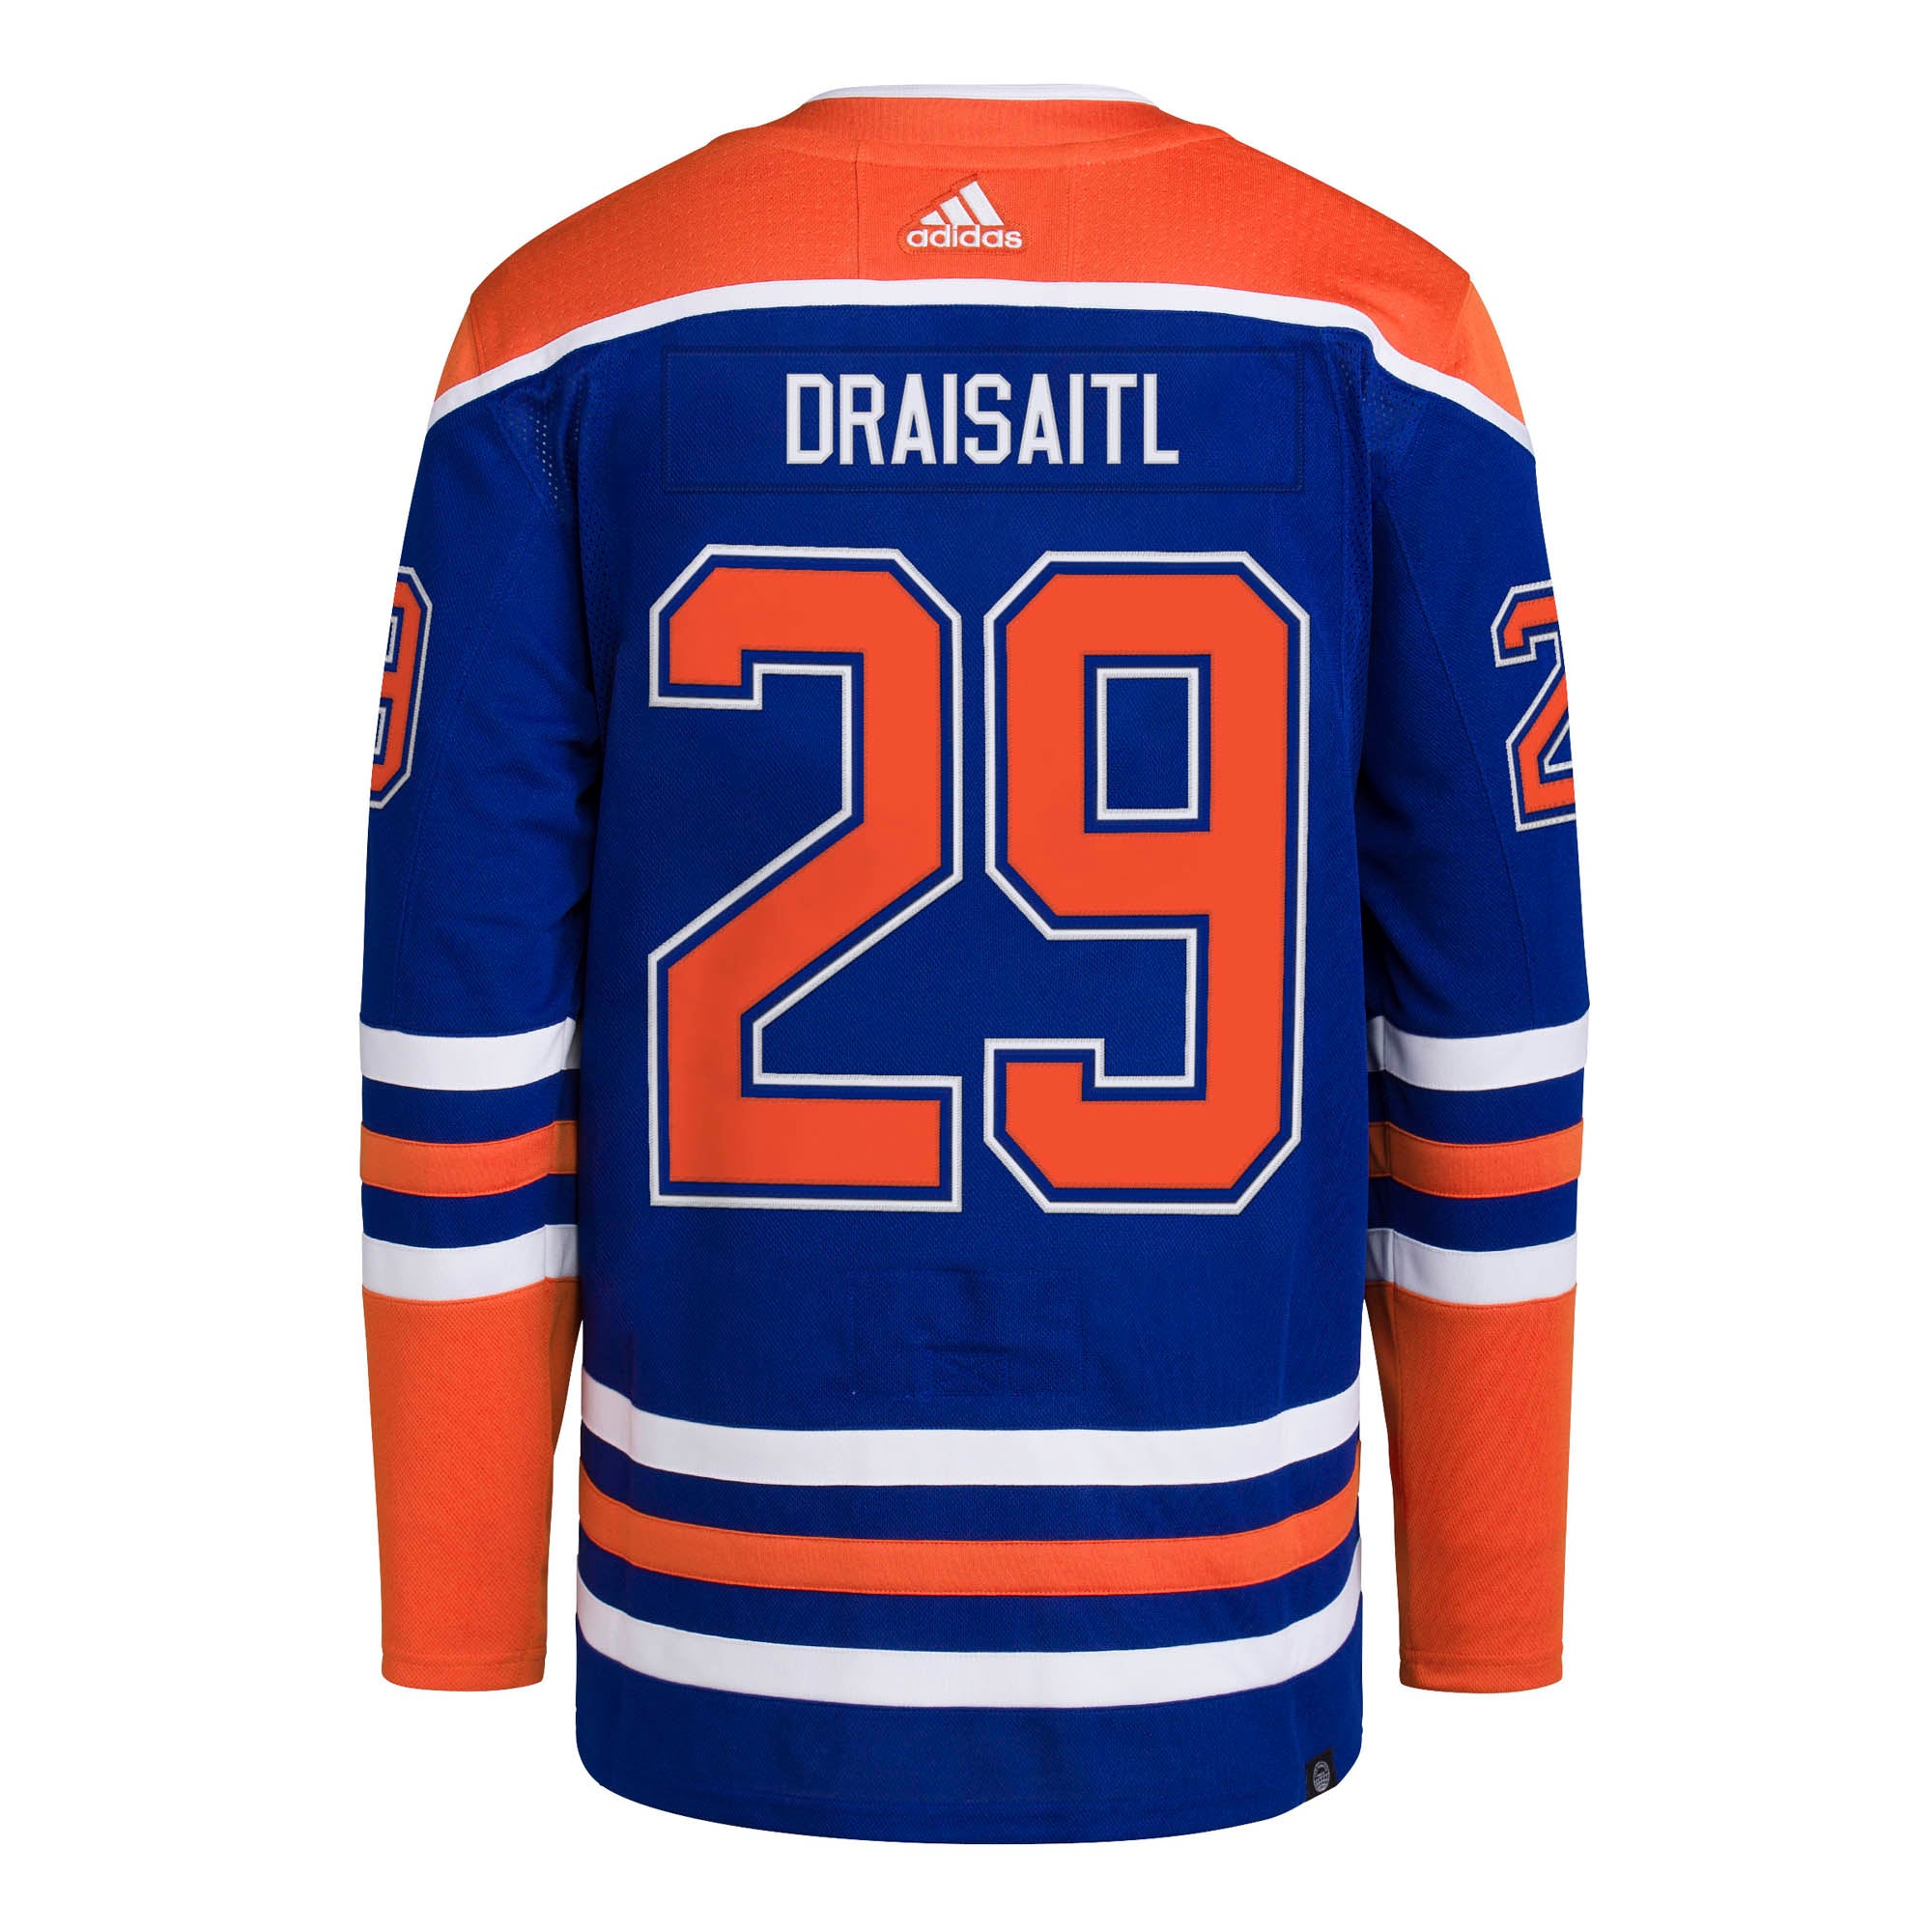 Edmonton Oilers captain's jersey